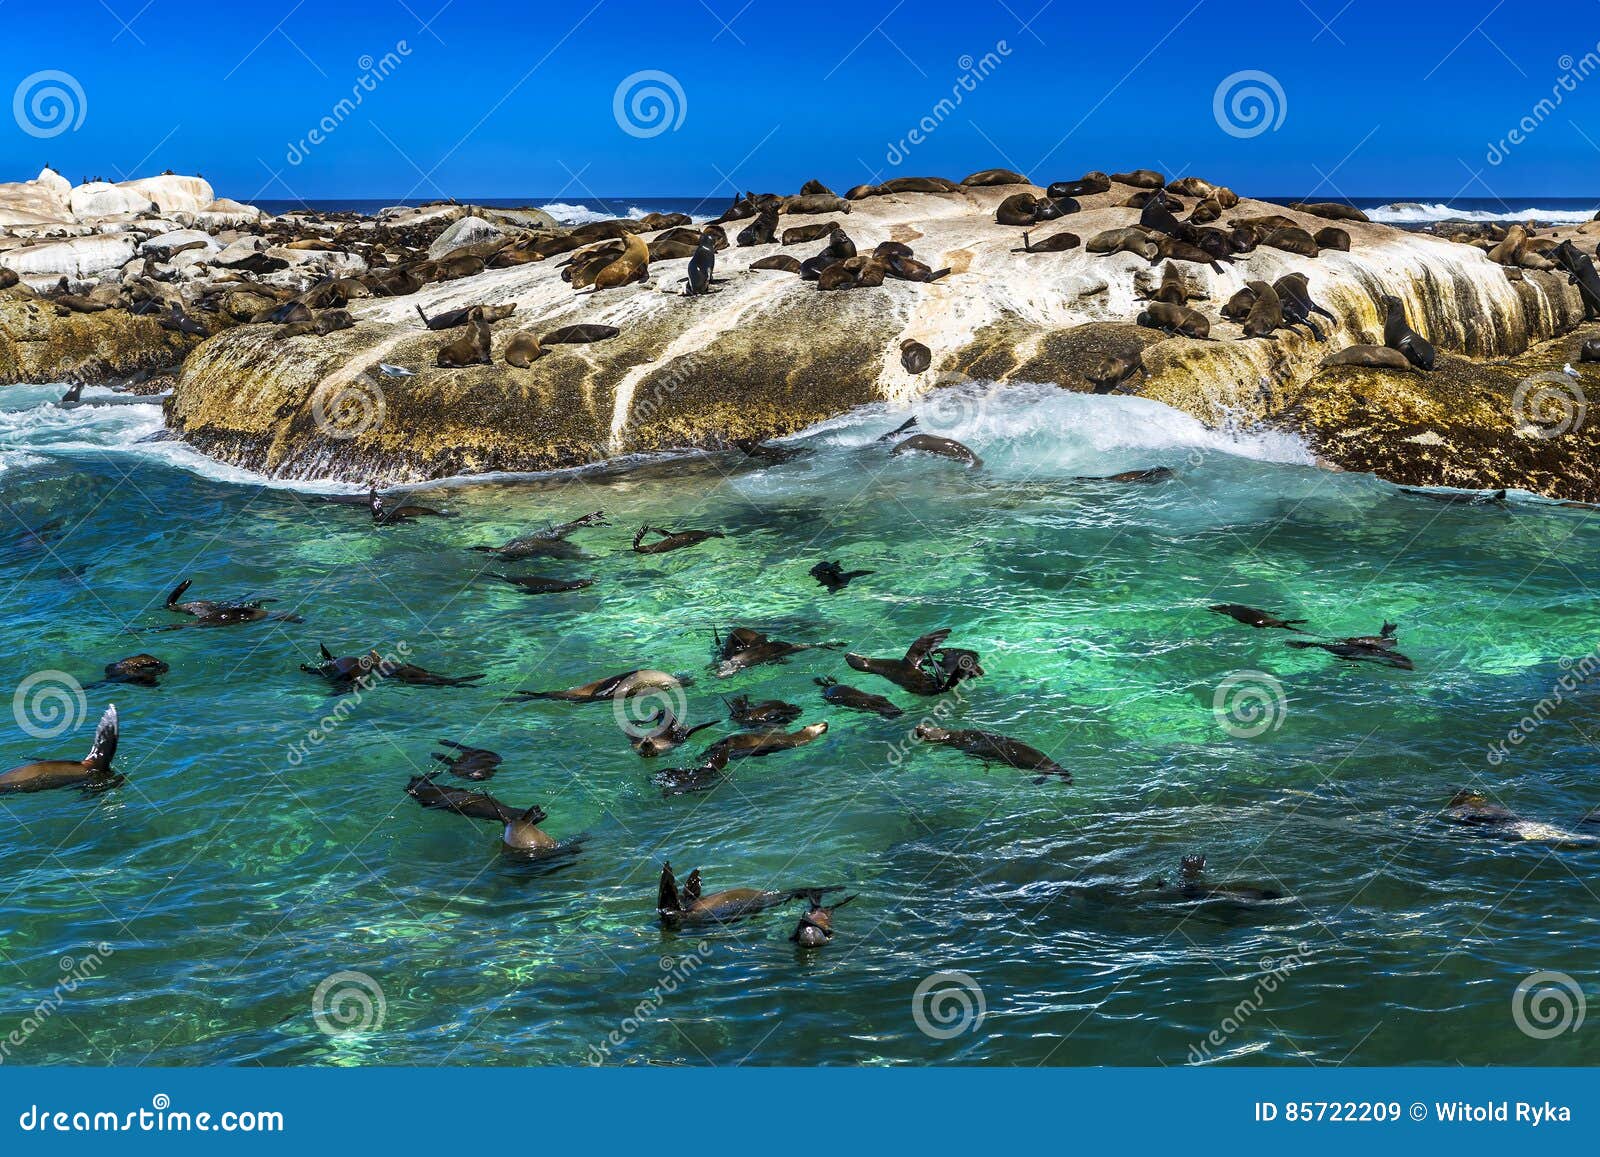 fur seals on duiker island